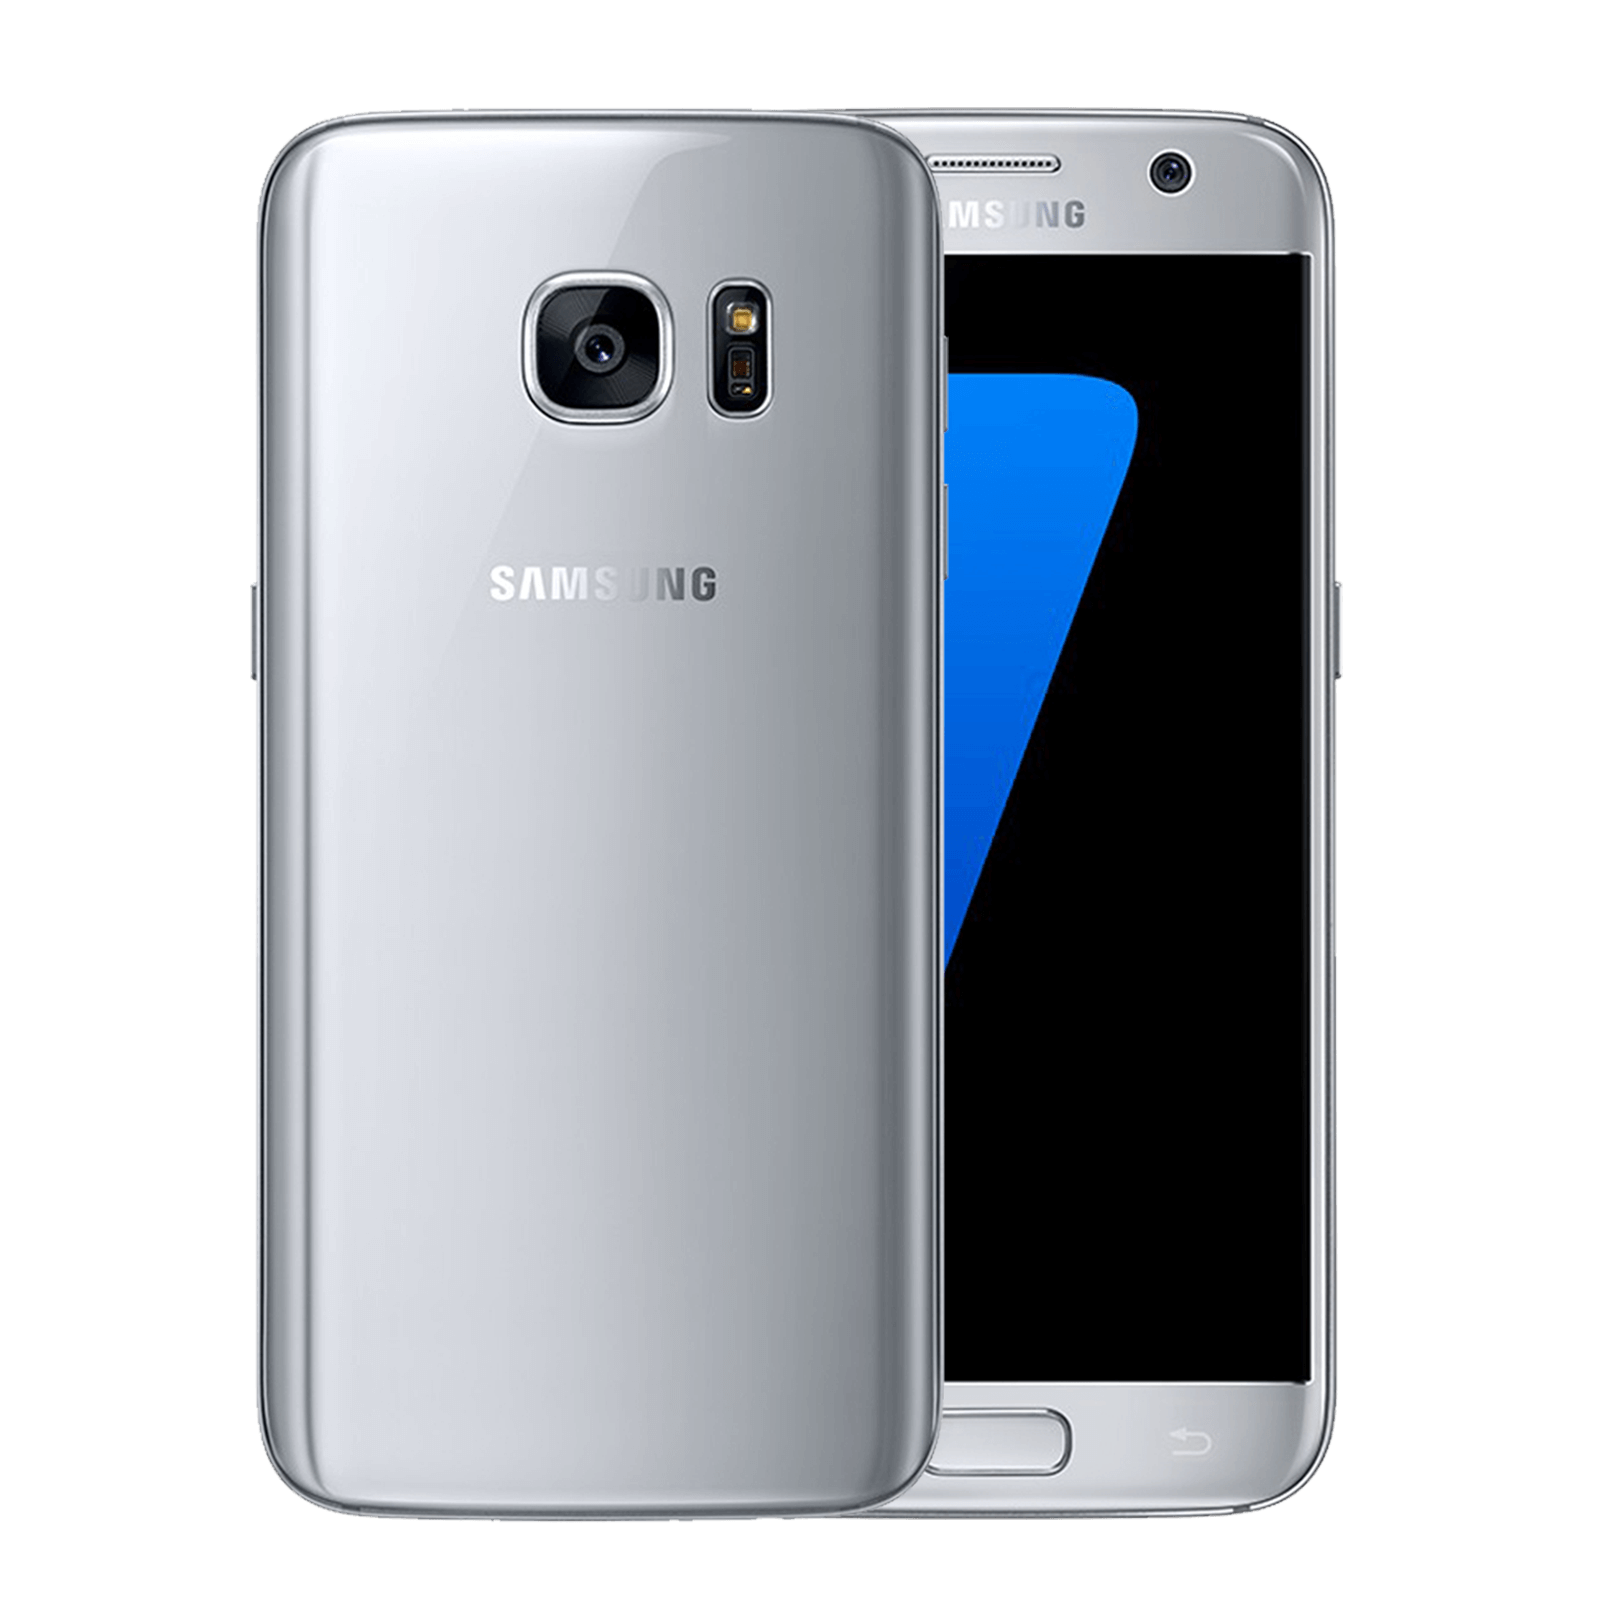 Samsung Galaxy S7 32GB Silver G930F Very Good - Unlocked 32GB Silver Very Good